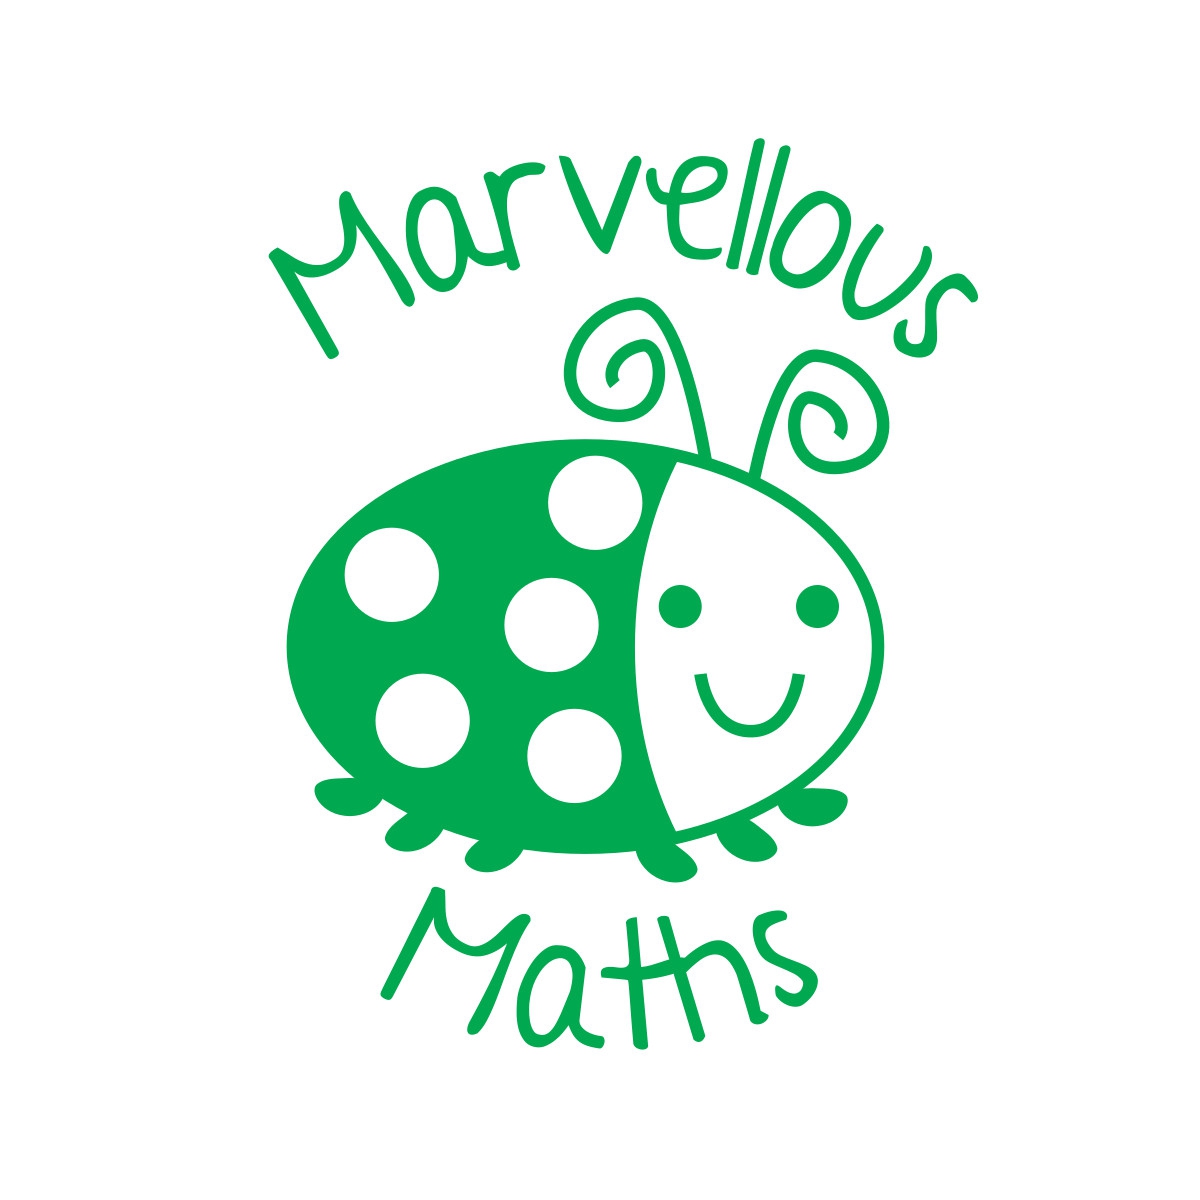 Stamper: Marvellous Maths